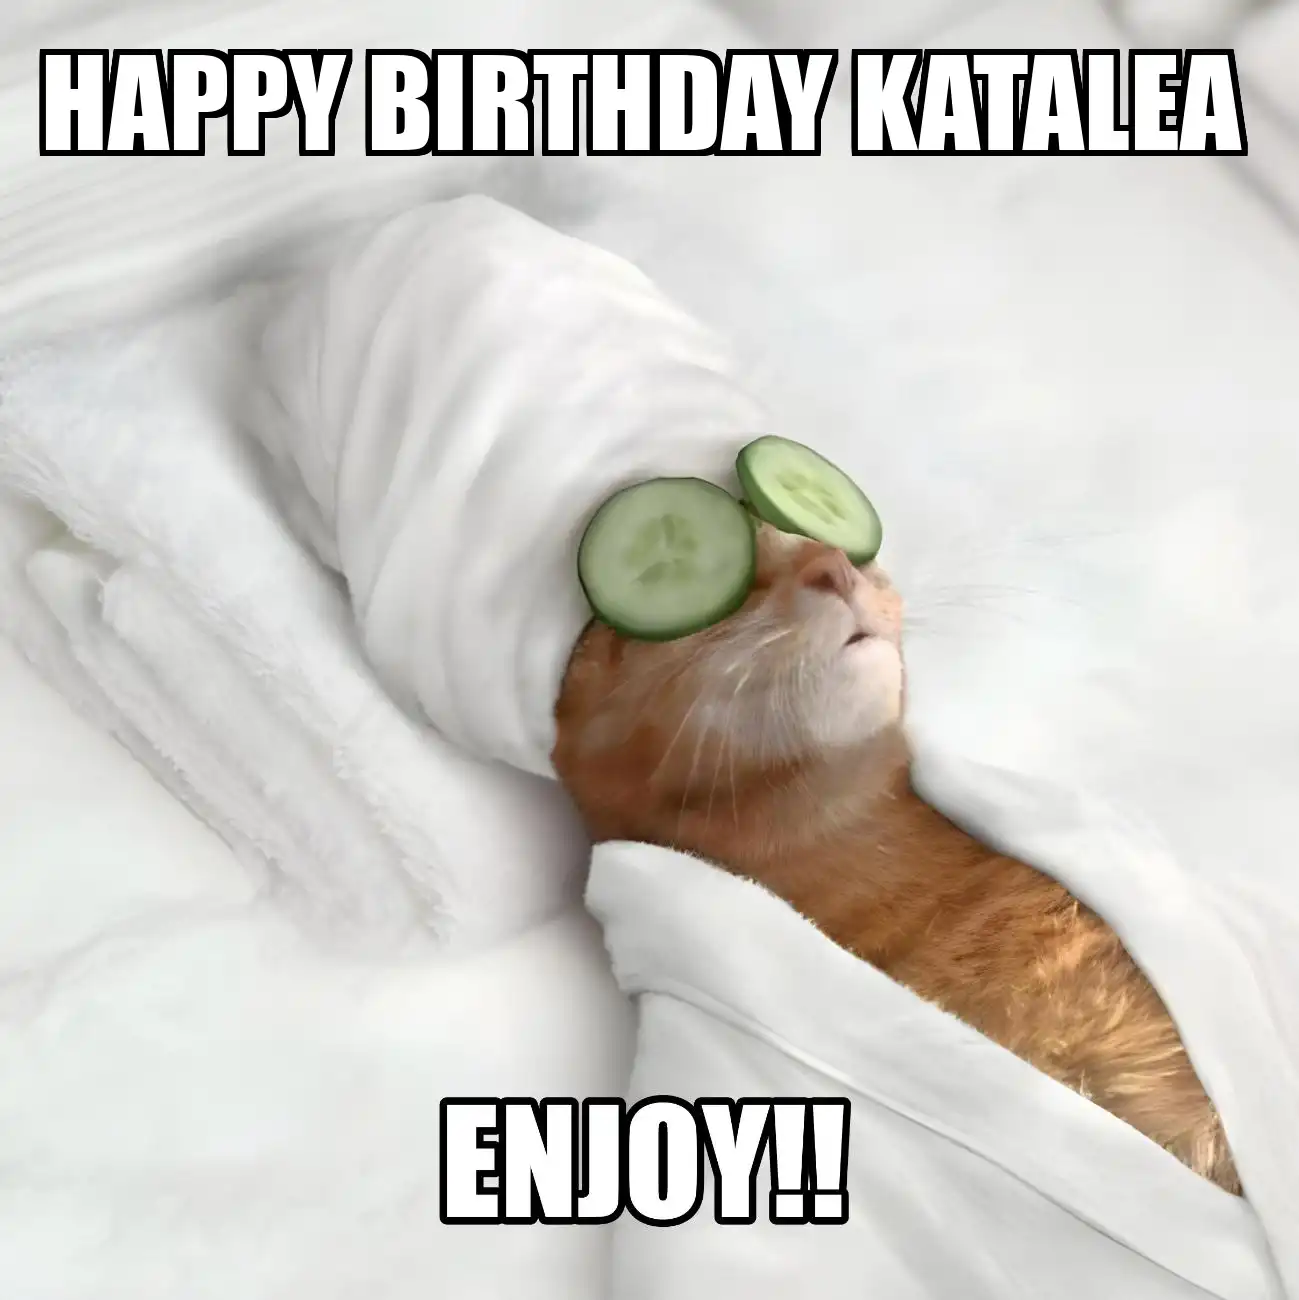 Happy Birthday Katalea Enjoy Cat Meme